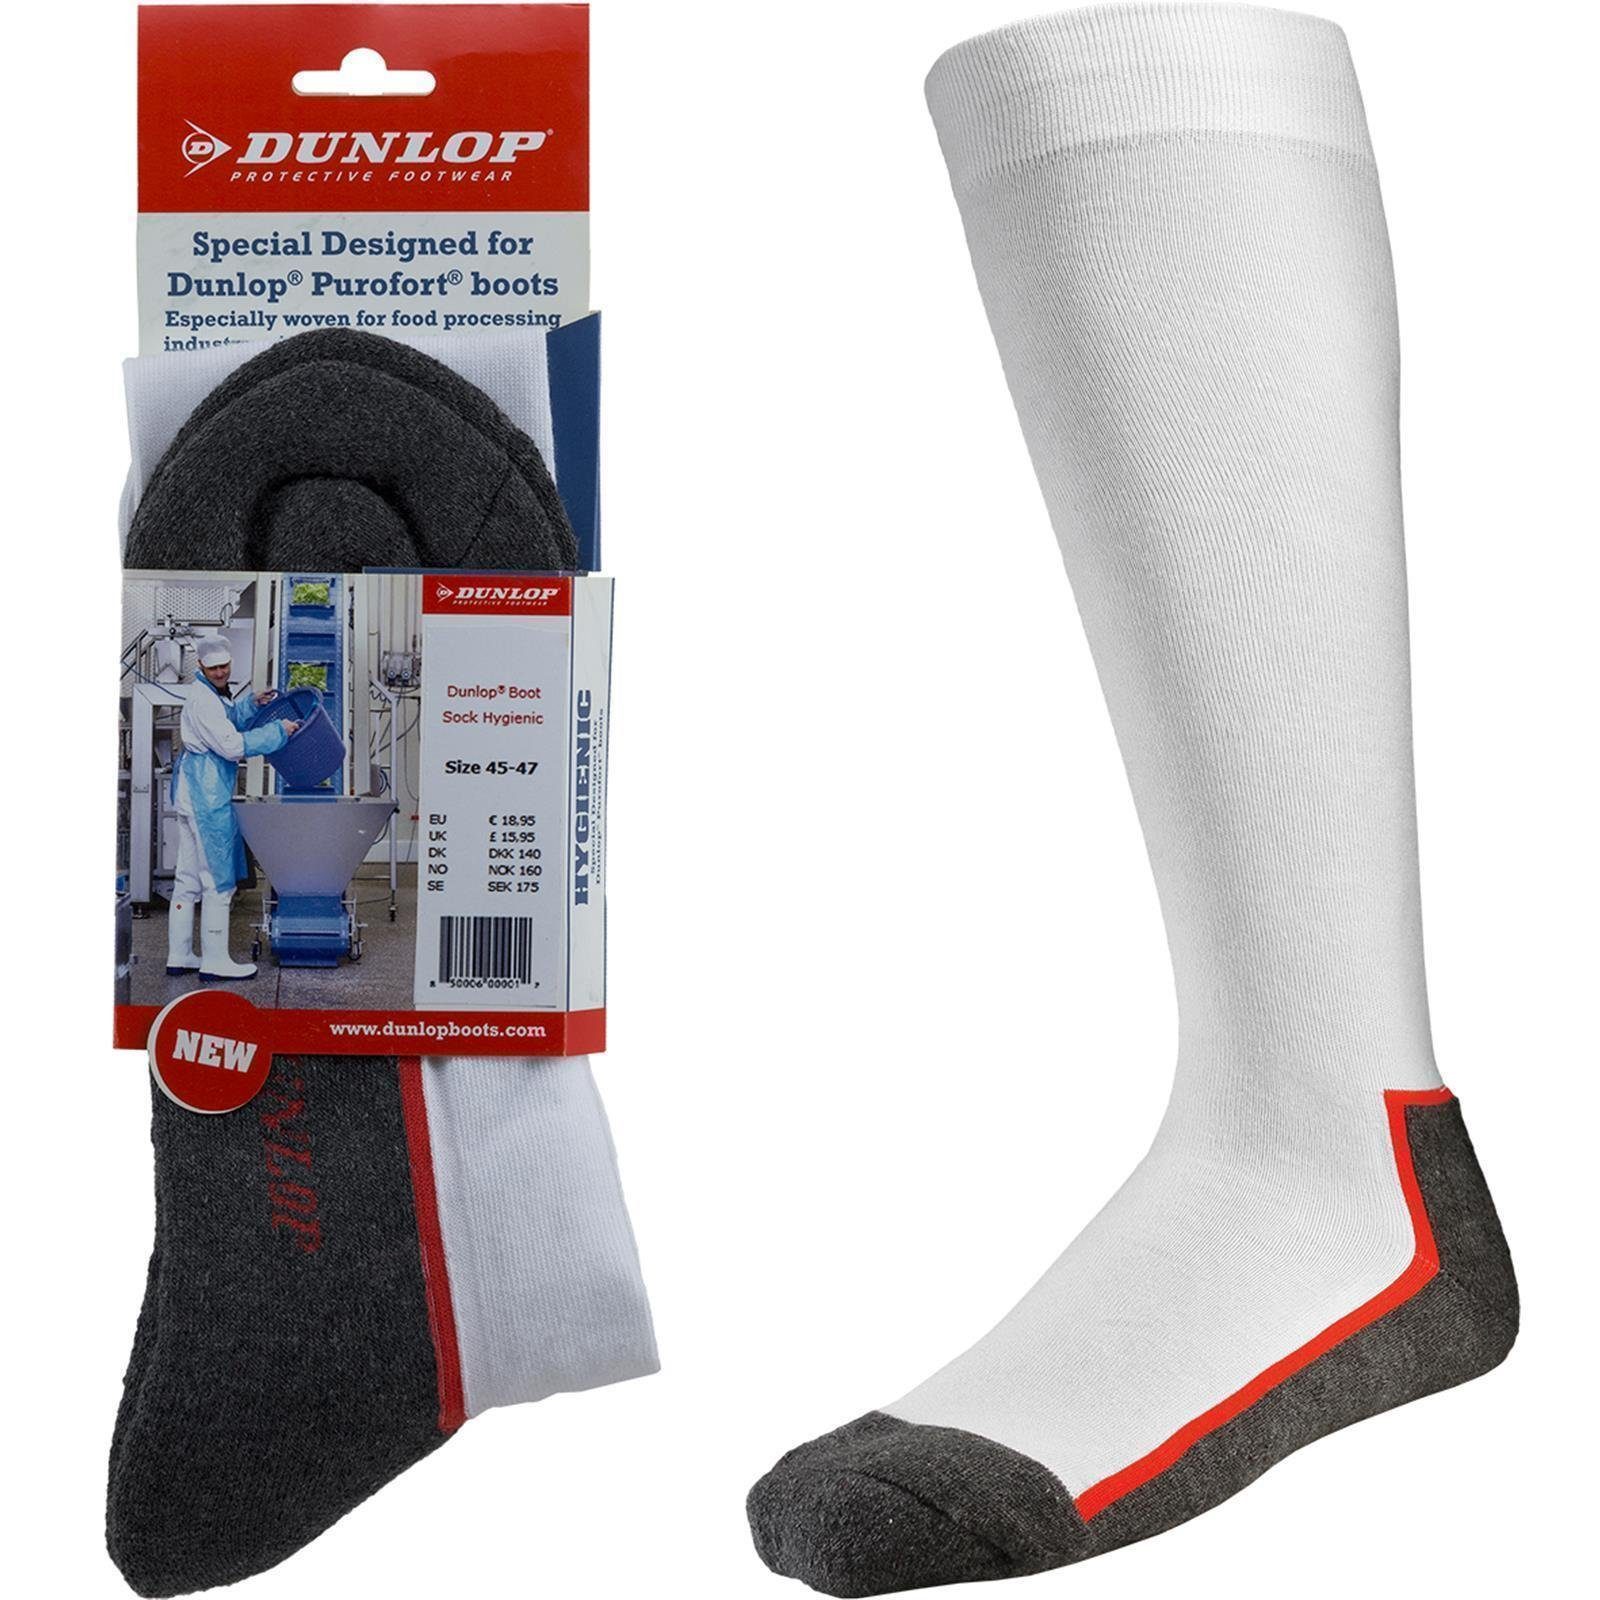 Dunlop_Workwear Arbeitssocken Stiefel Boot Sock weiß/grau Hygienic